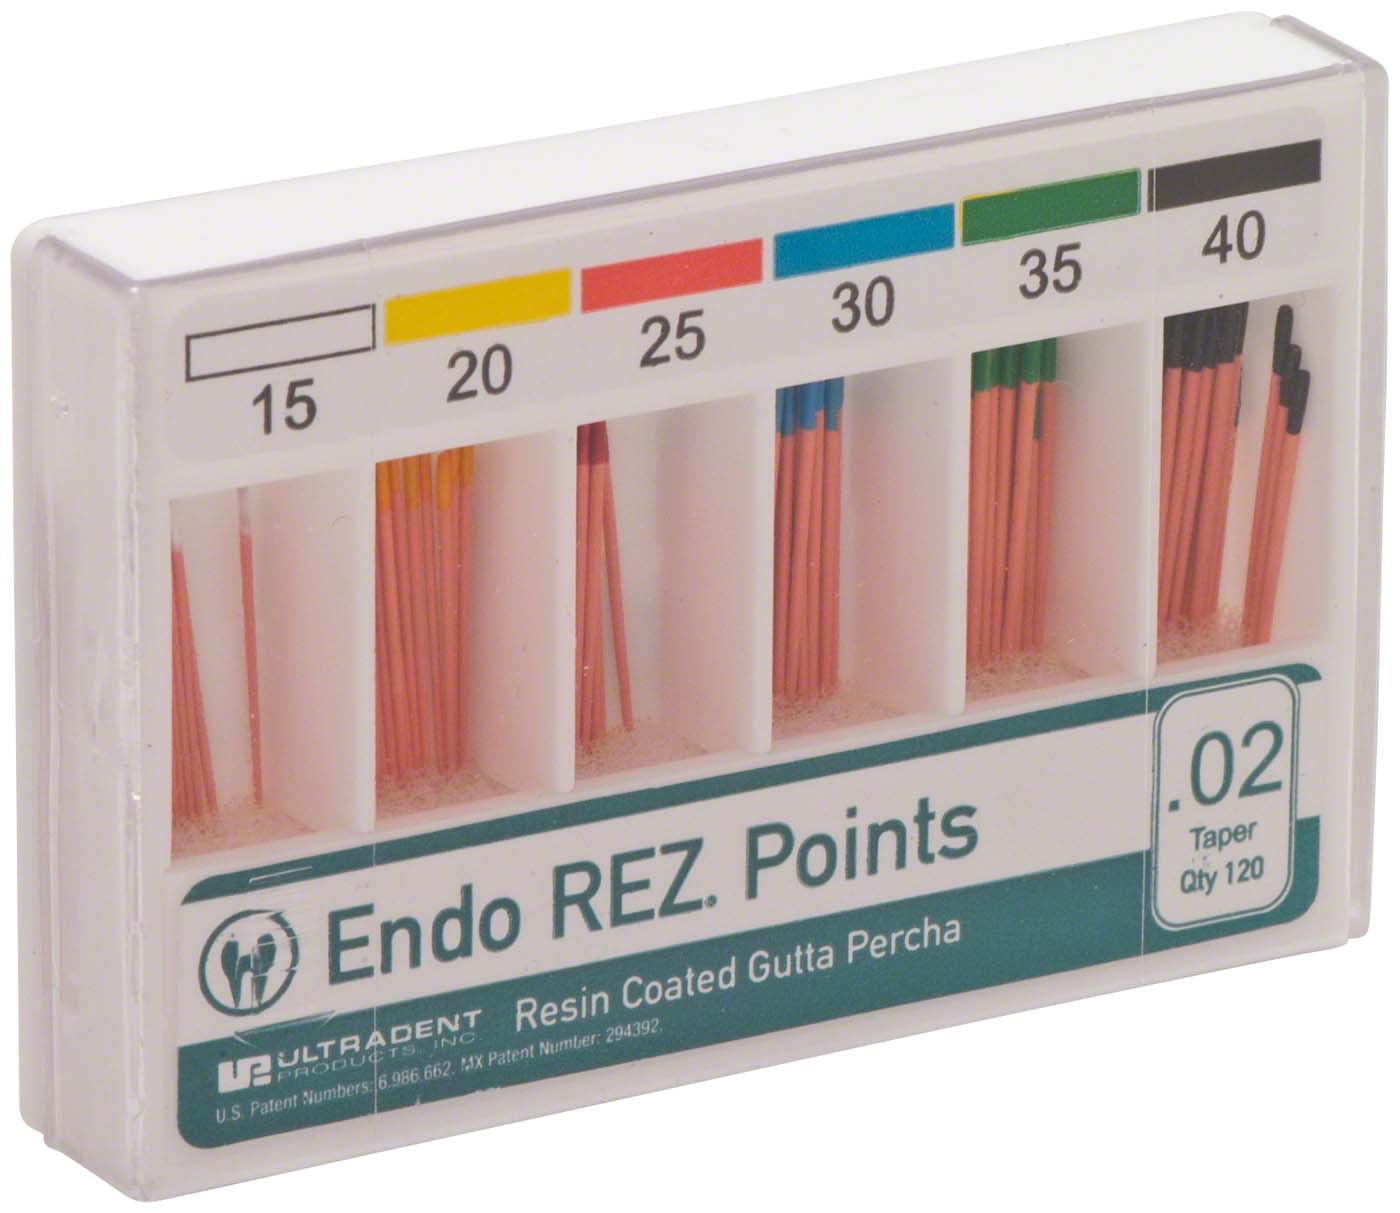 EndoREZ™ Ultradent Products